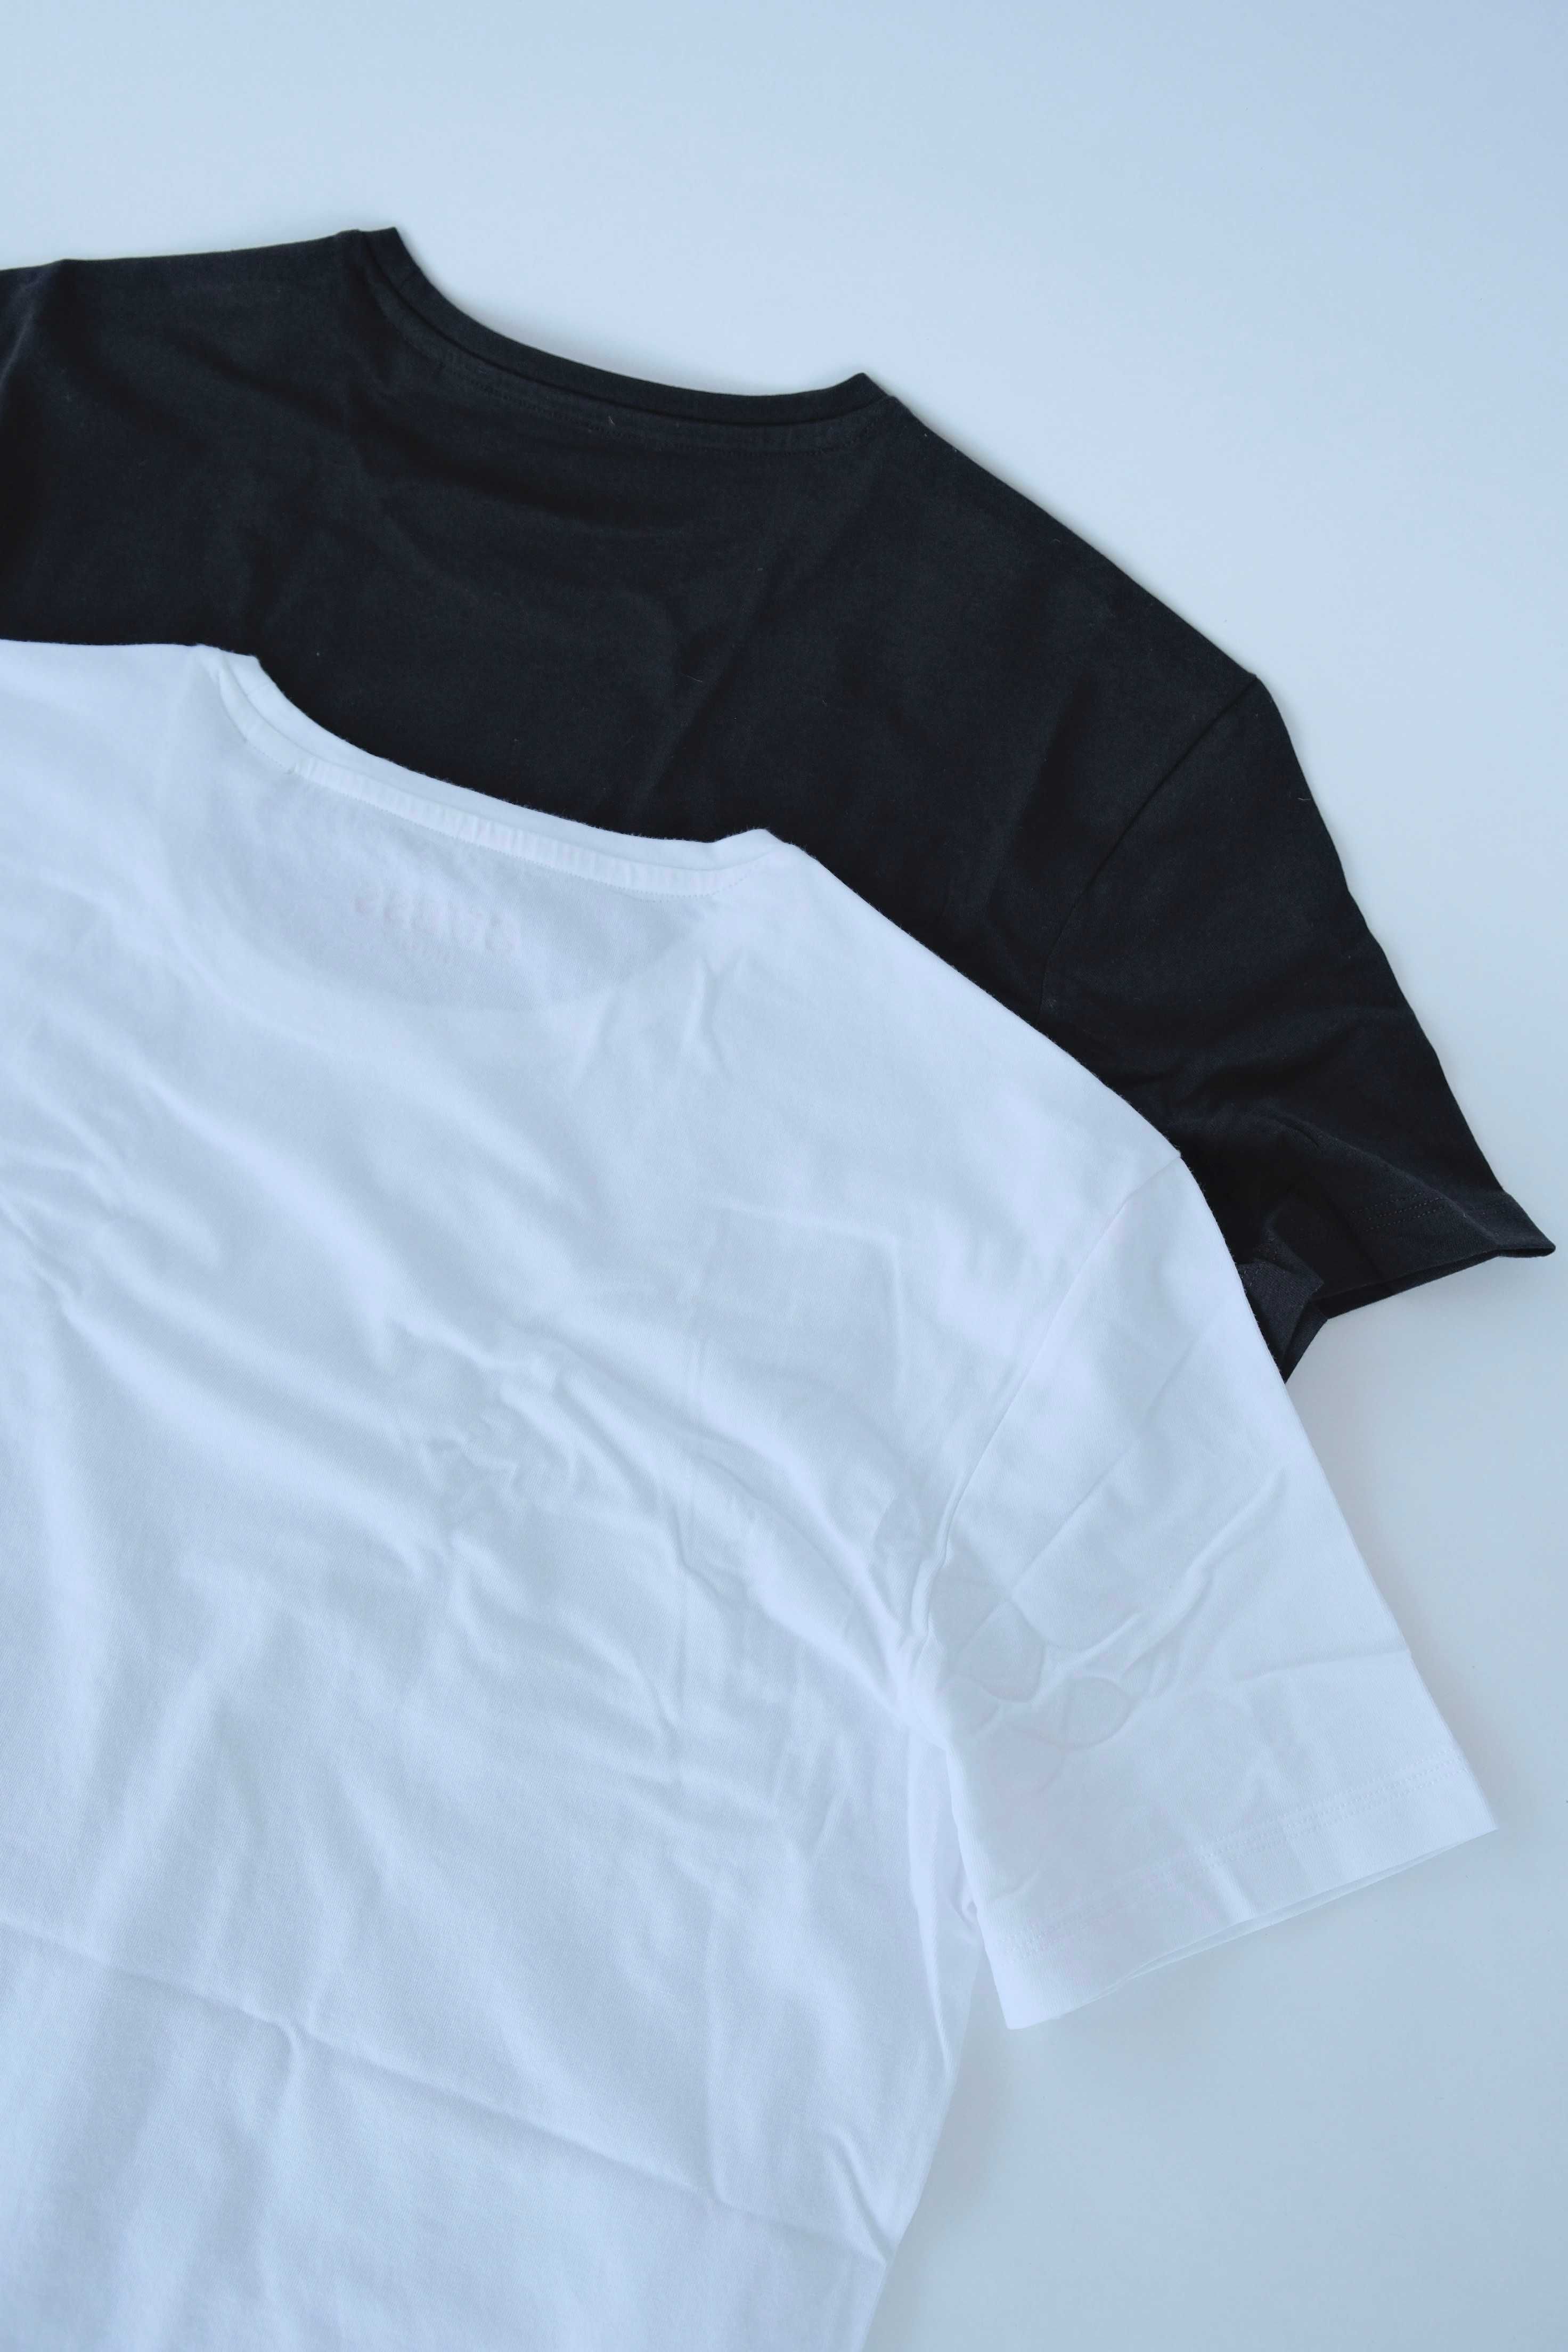 ПРОМО GUESS-S/M/L/XL/XXL-2 броя комплект  мъжки тениски бяло/черно